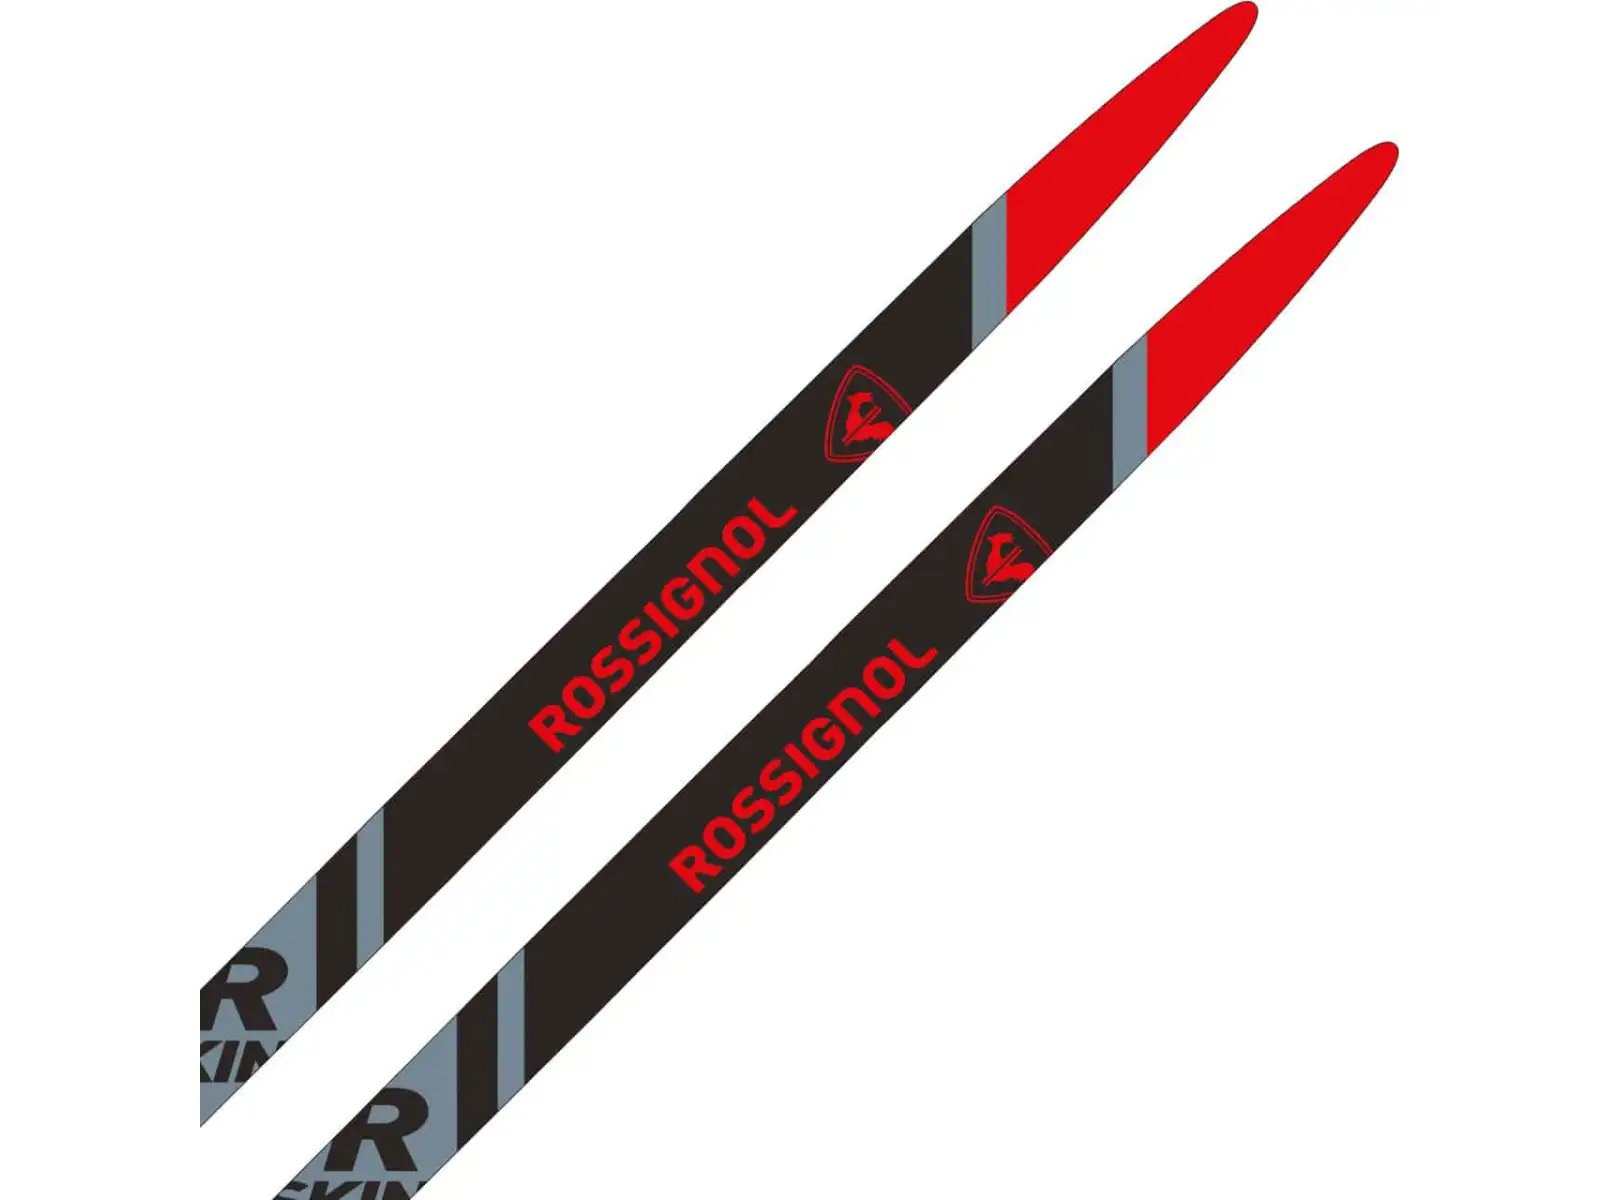 Rossignol R-Skin Race Junior-XC běžecké lyže